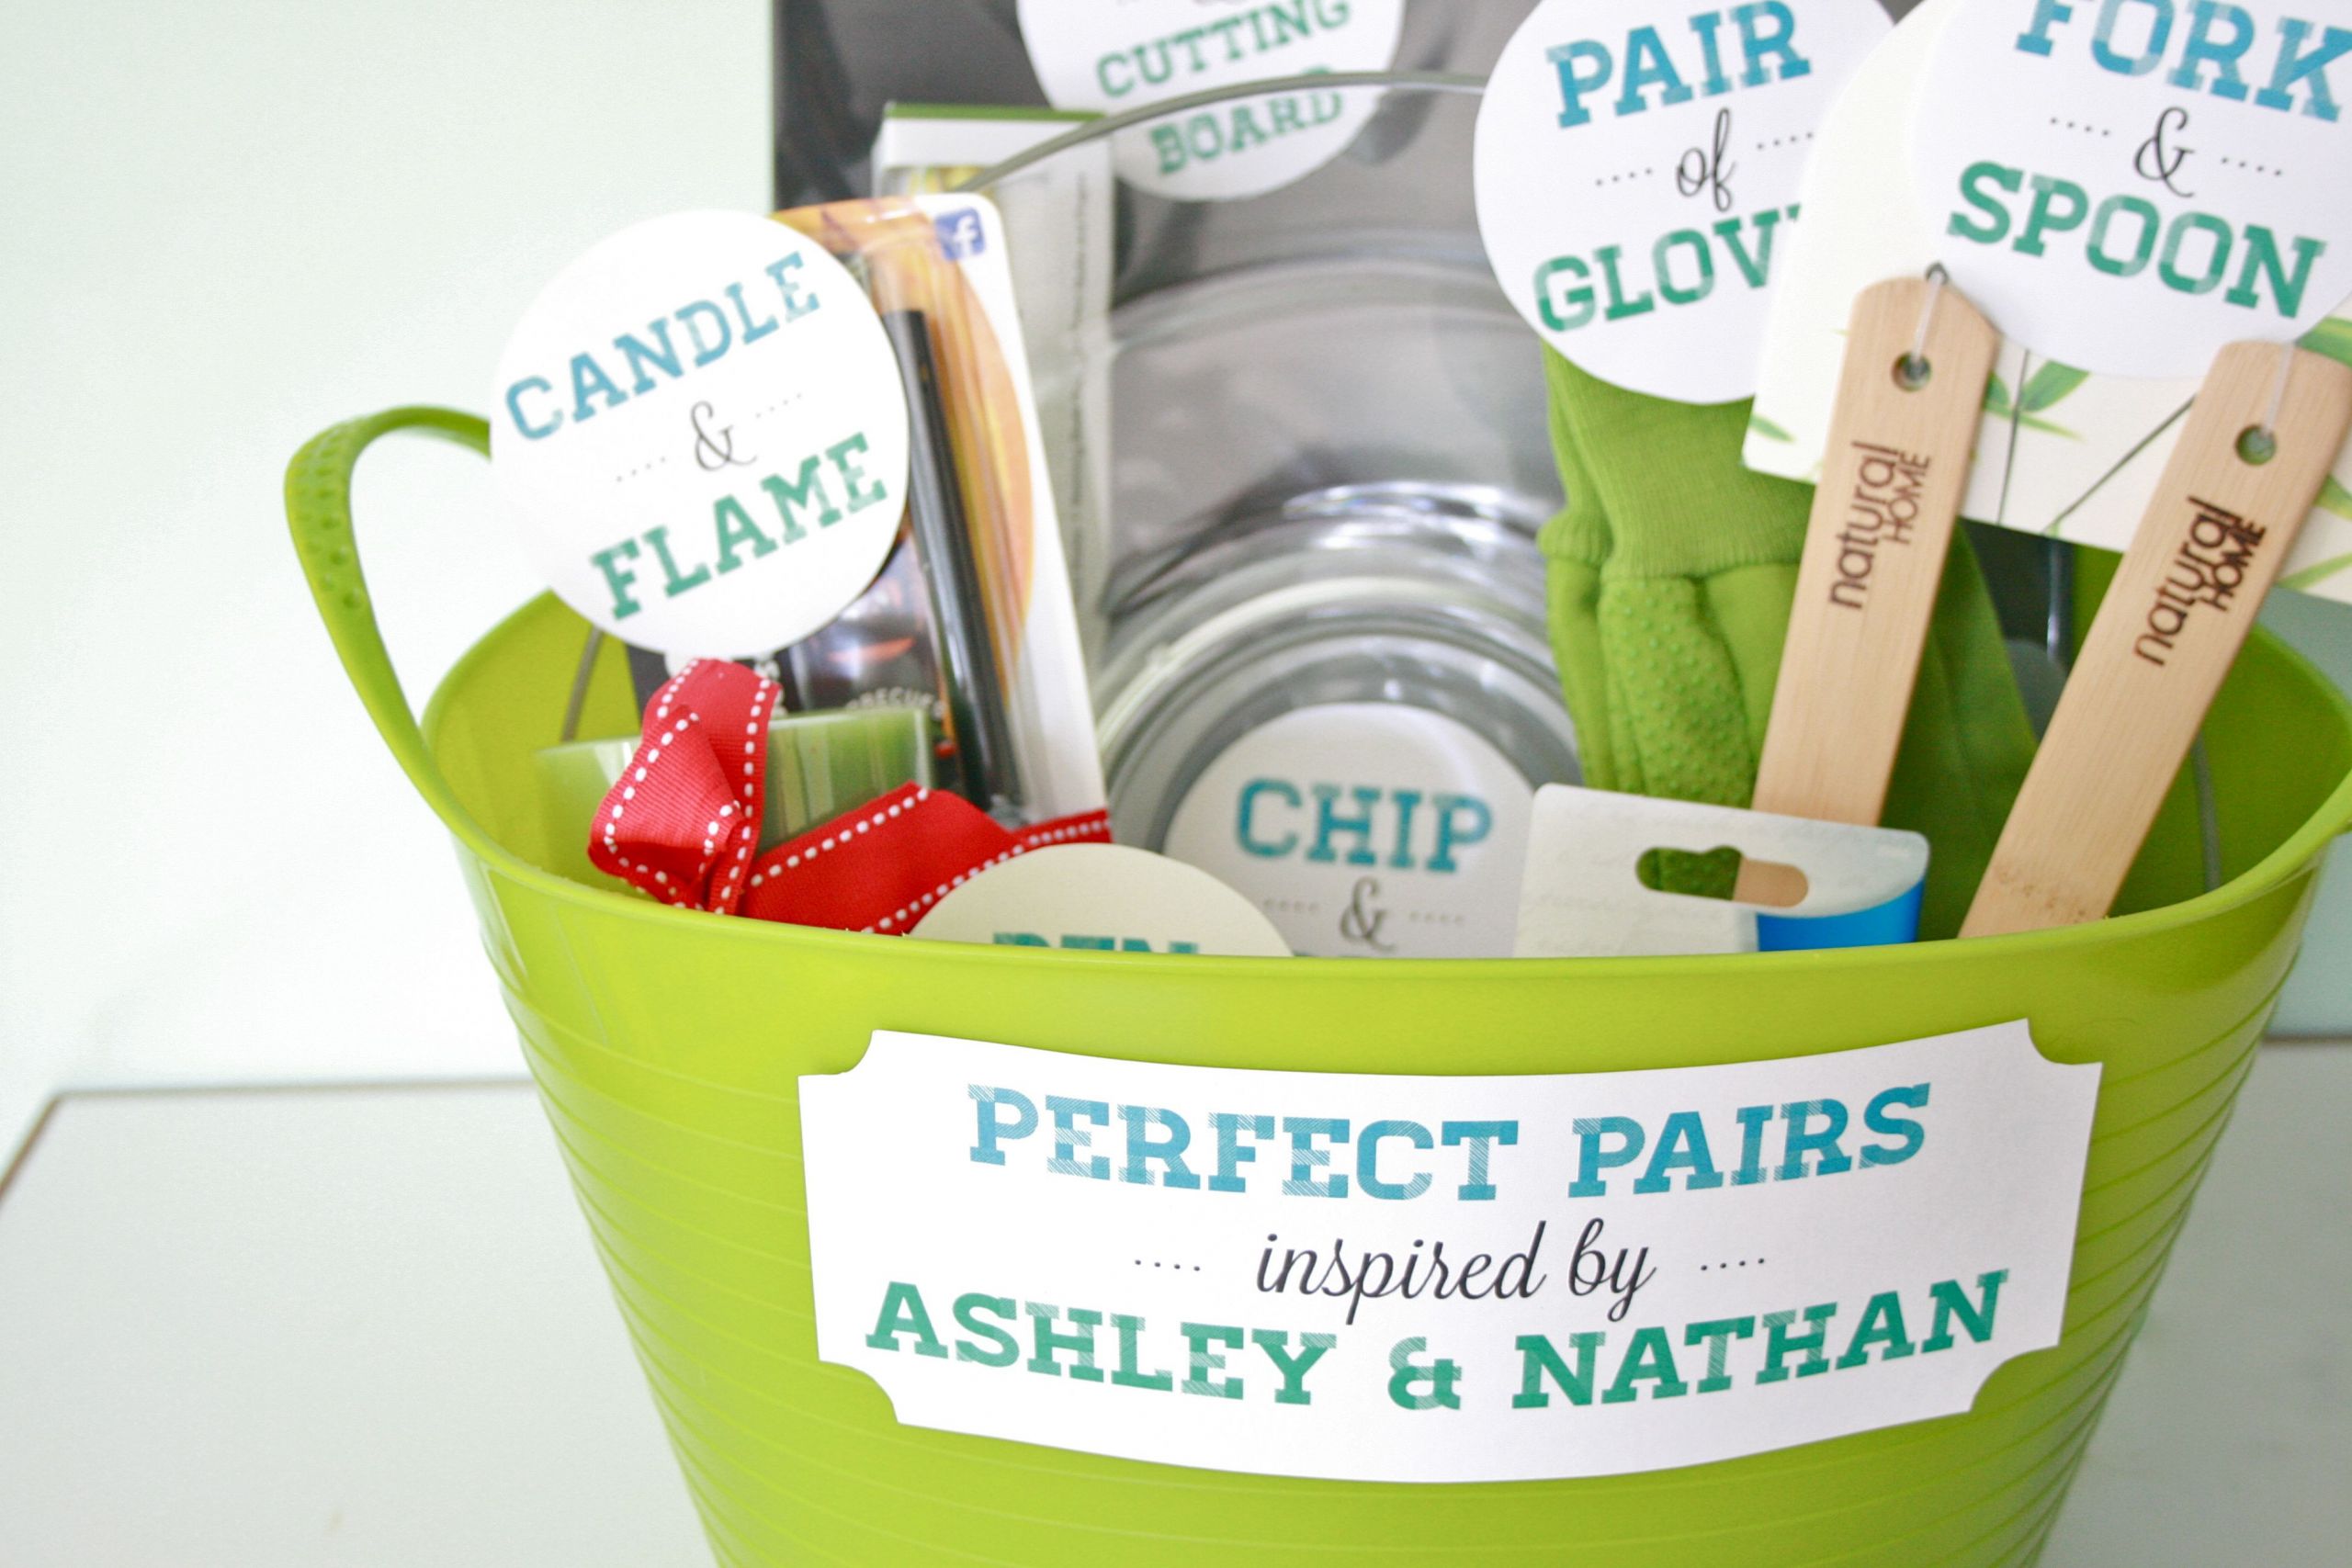 Cute Bridal Shower Gift Basket Ideas
 DIY "Perfect Pairs" Bridal Shower Gift